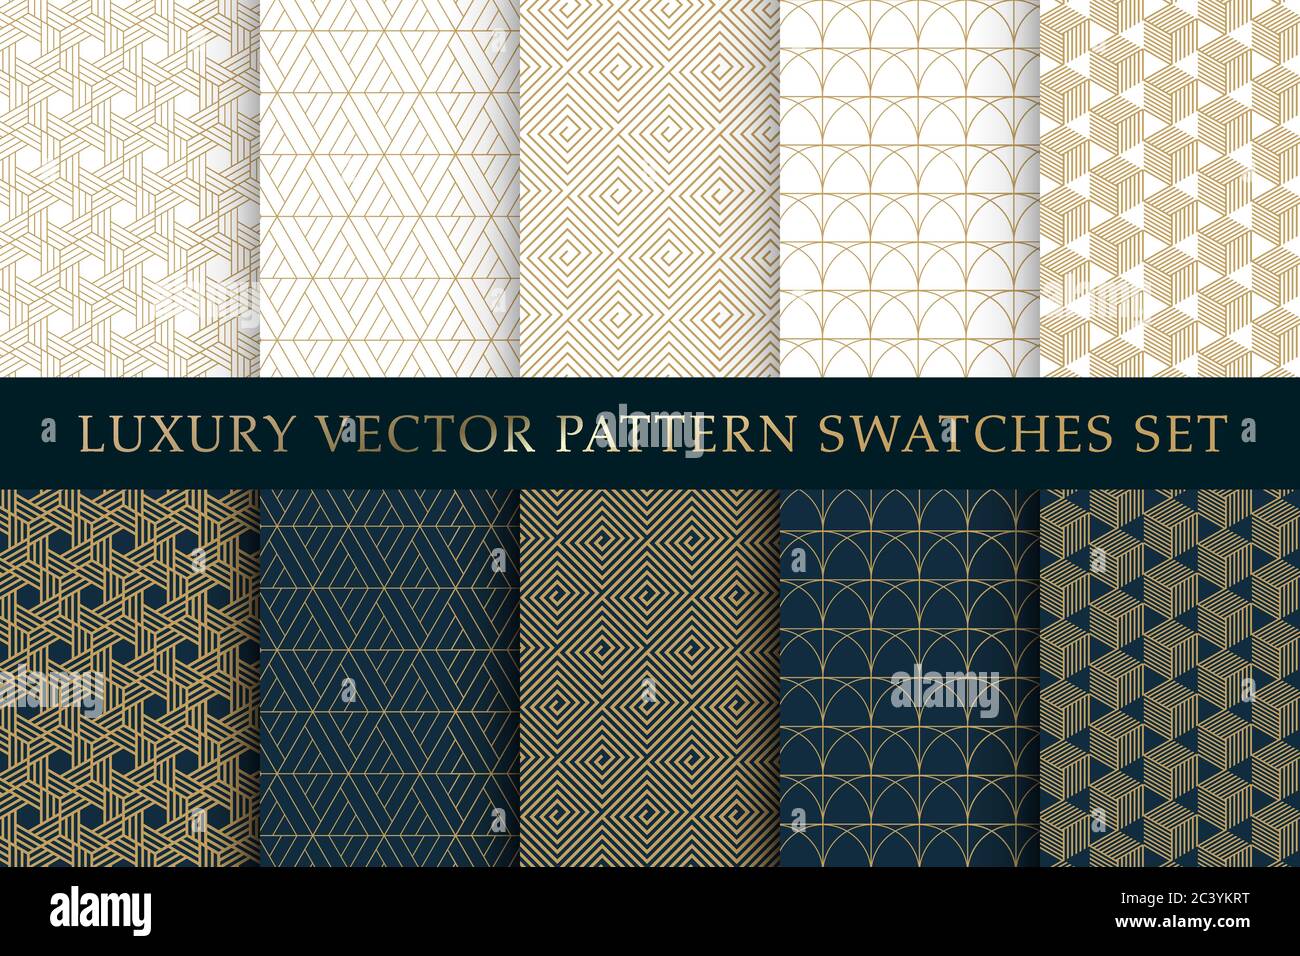 Golden luxury vector swatches pattern pack Stock Vector